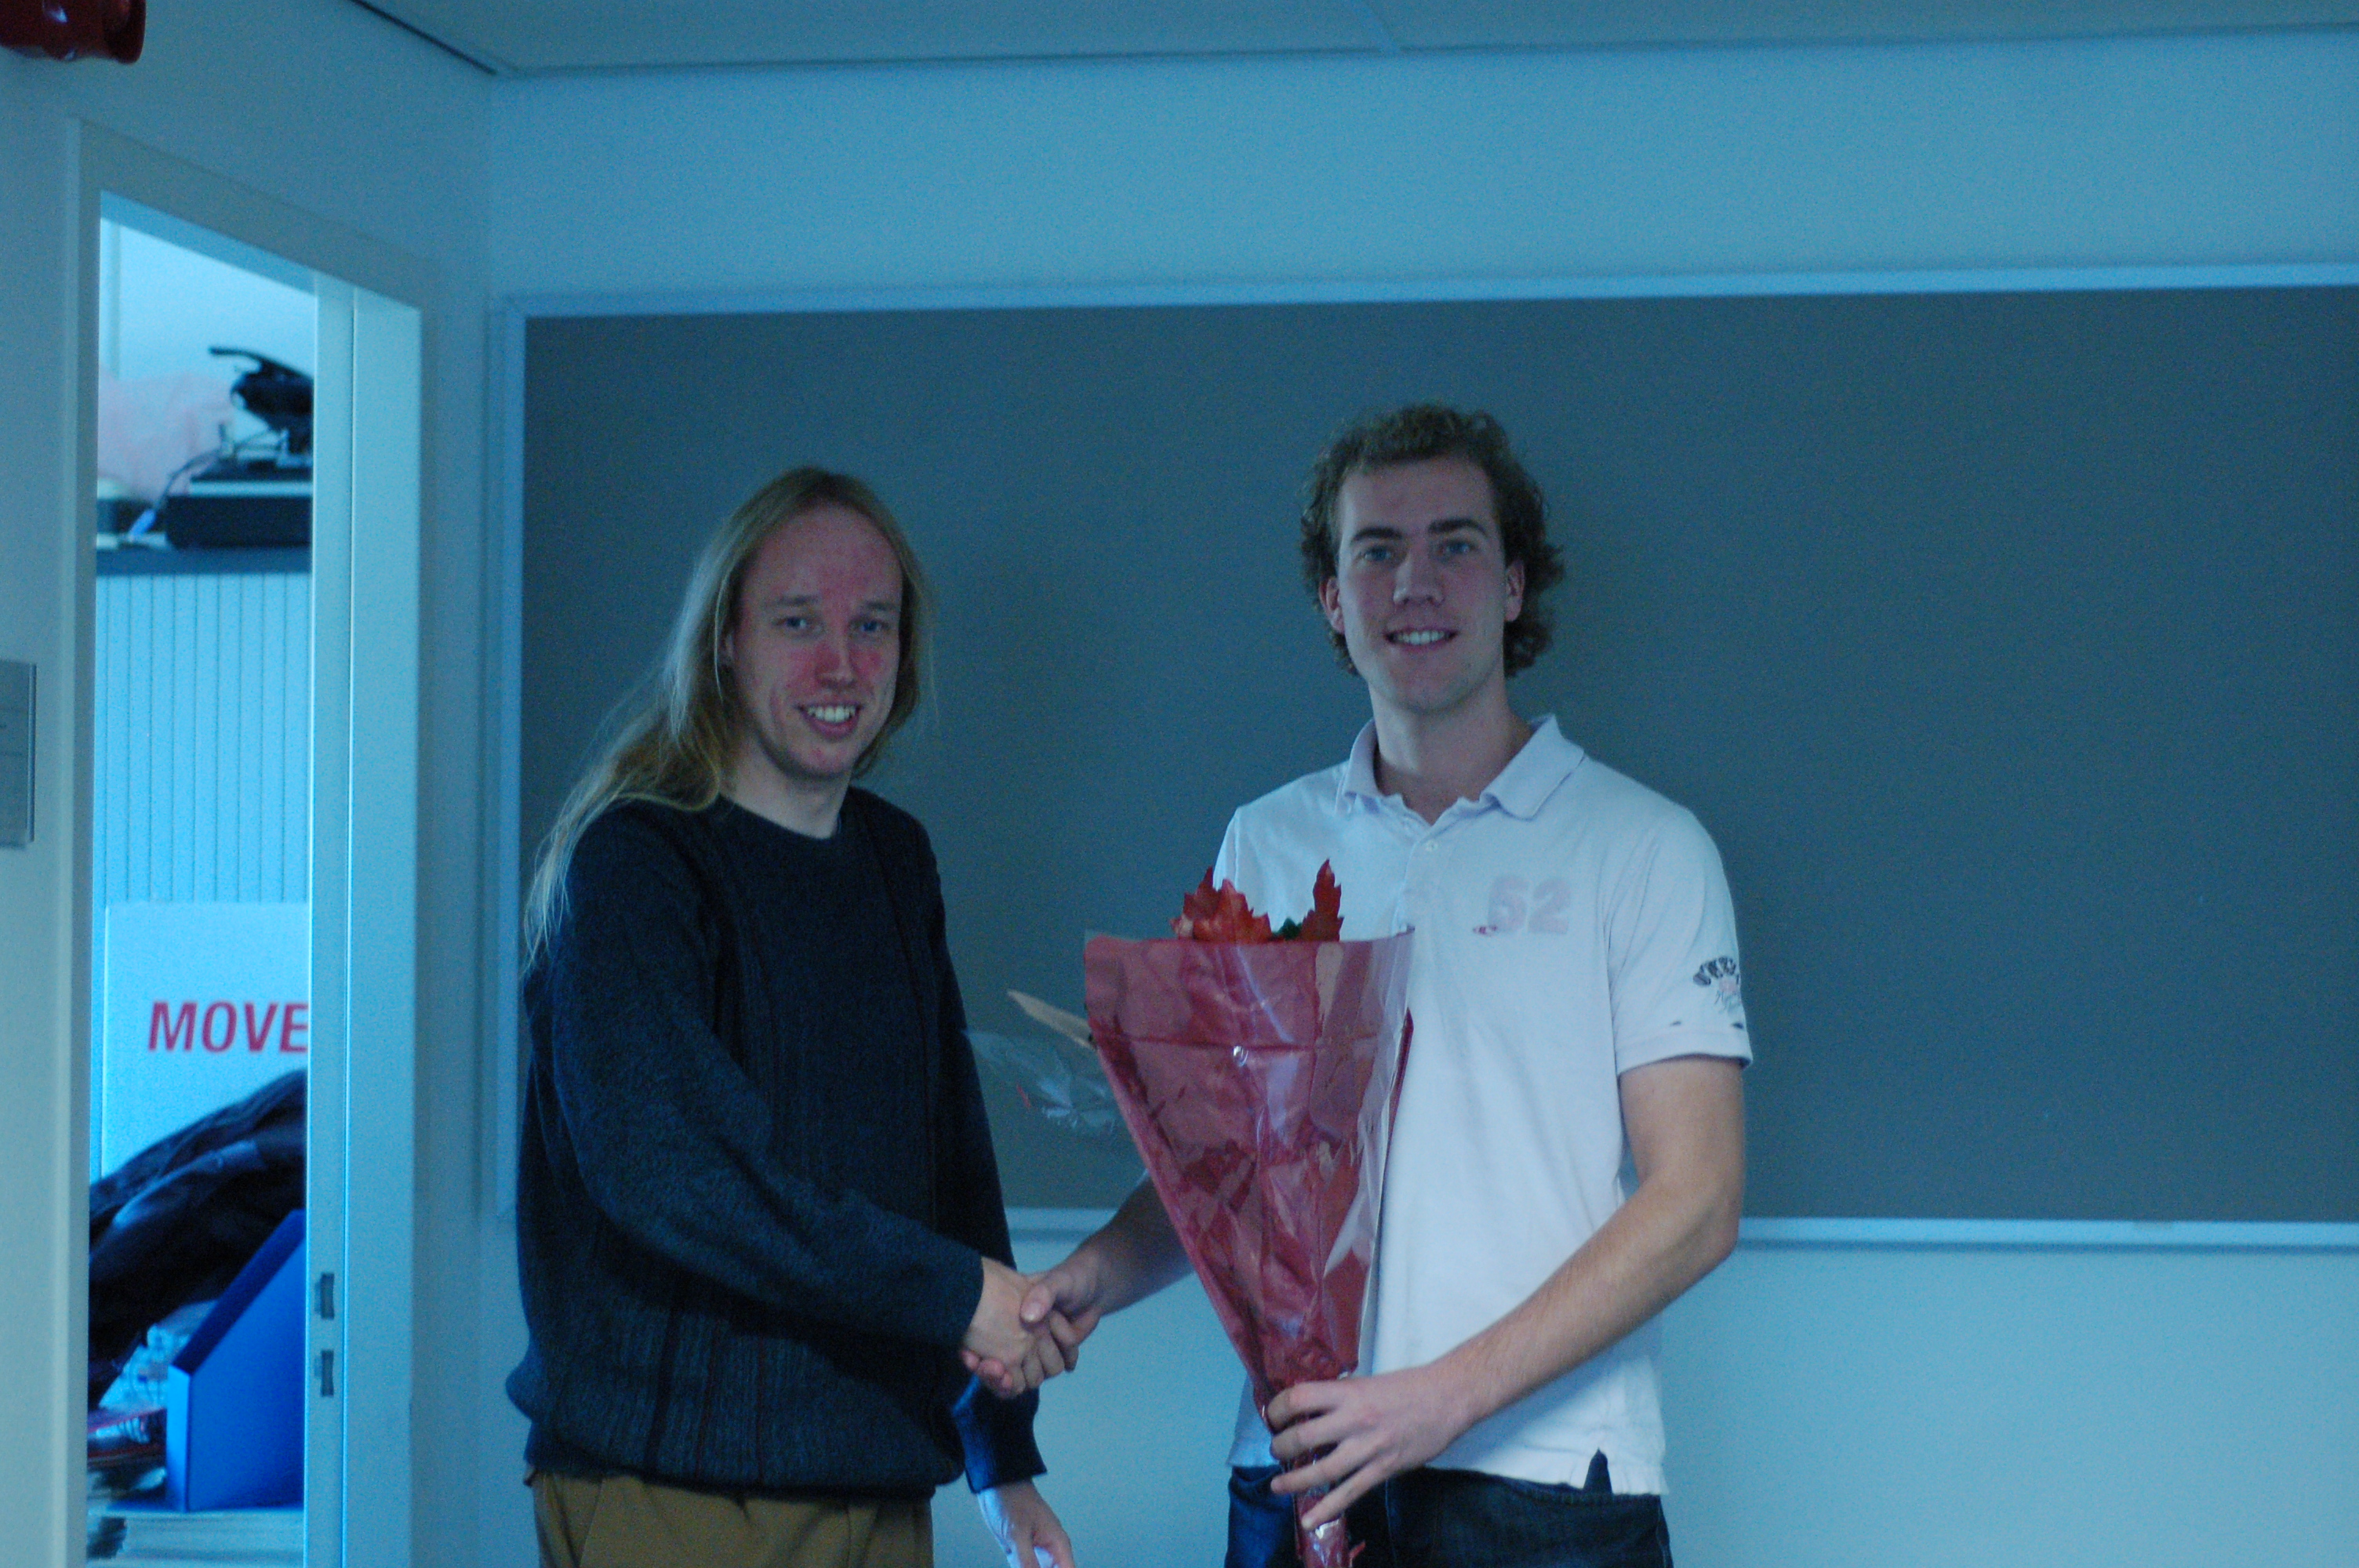 Pieter-Tjerk receives his education bouquet